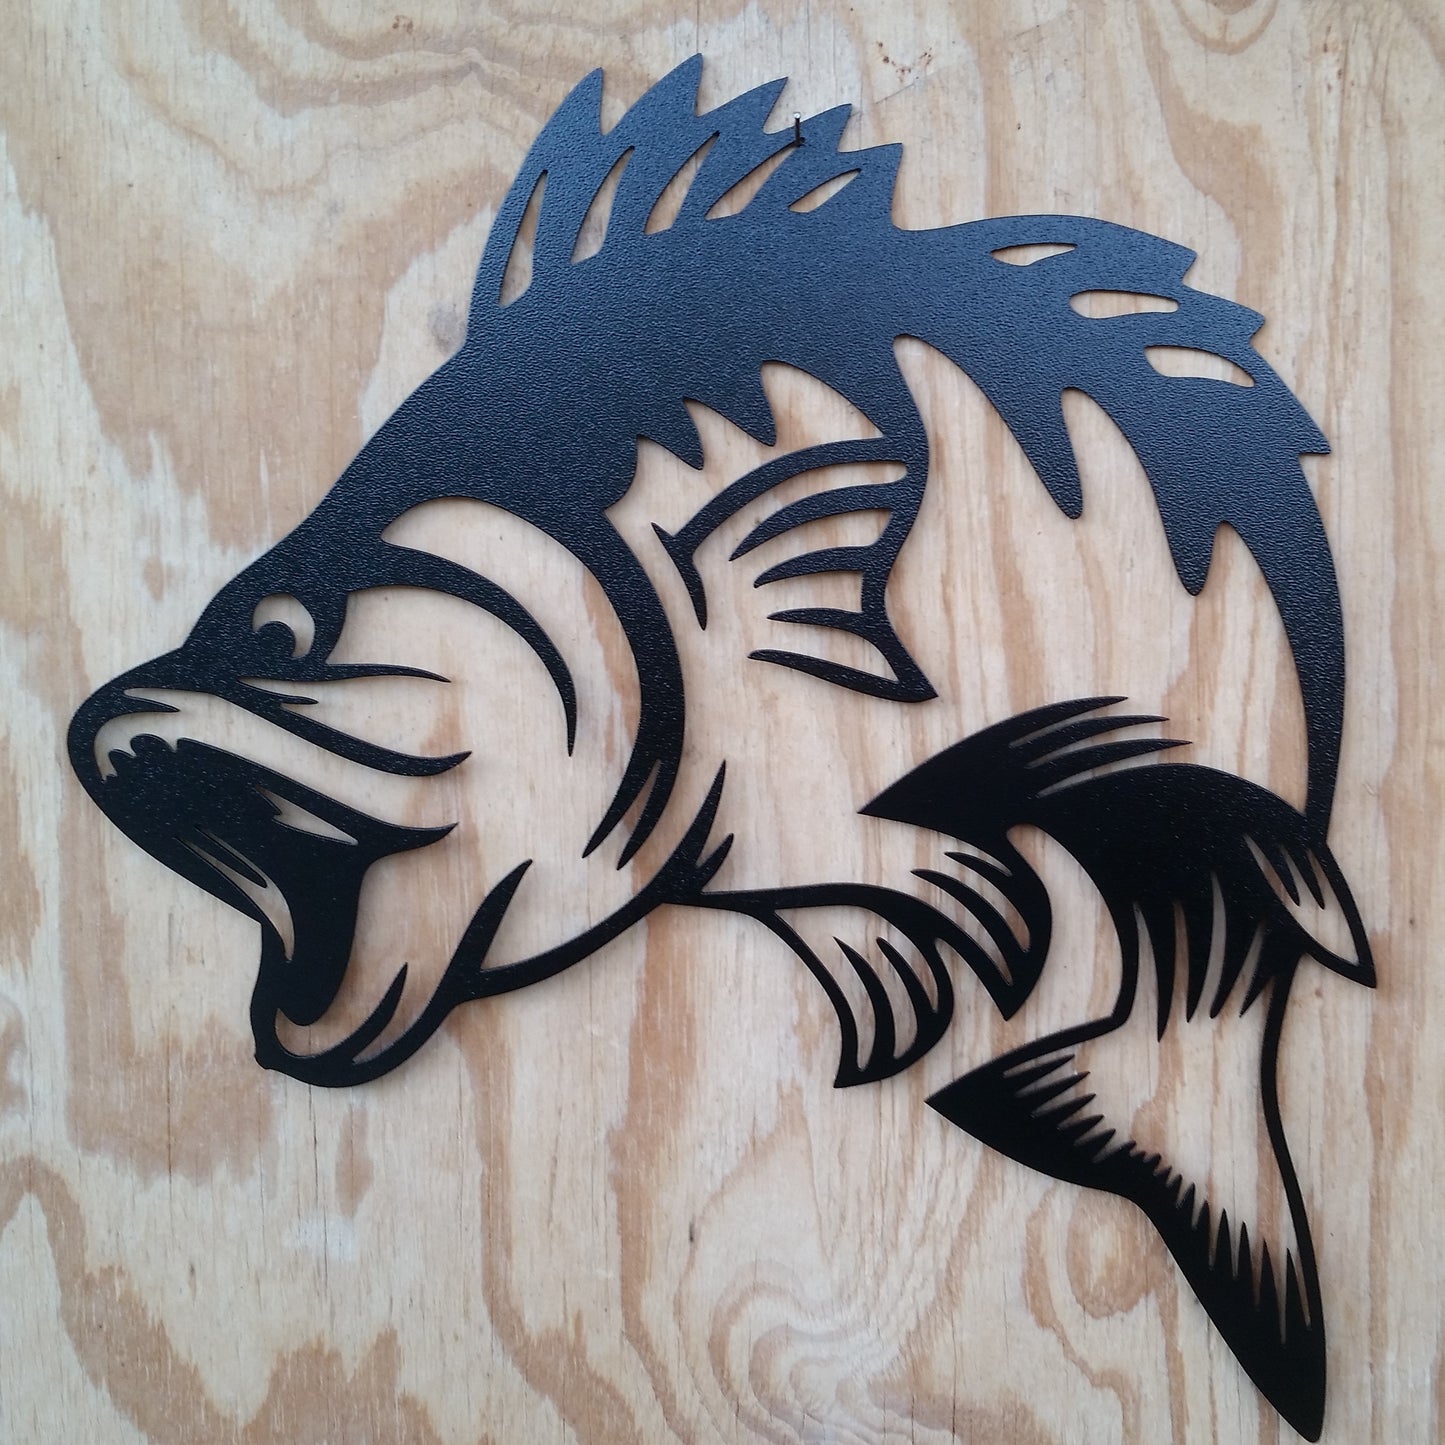 Bass Fish Metal Wall Art Decor, Jumping Metal Fish